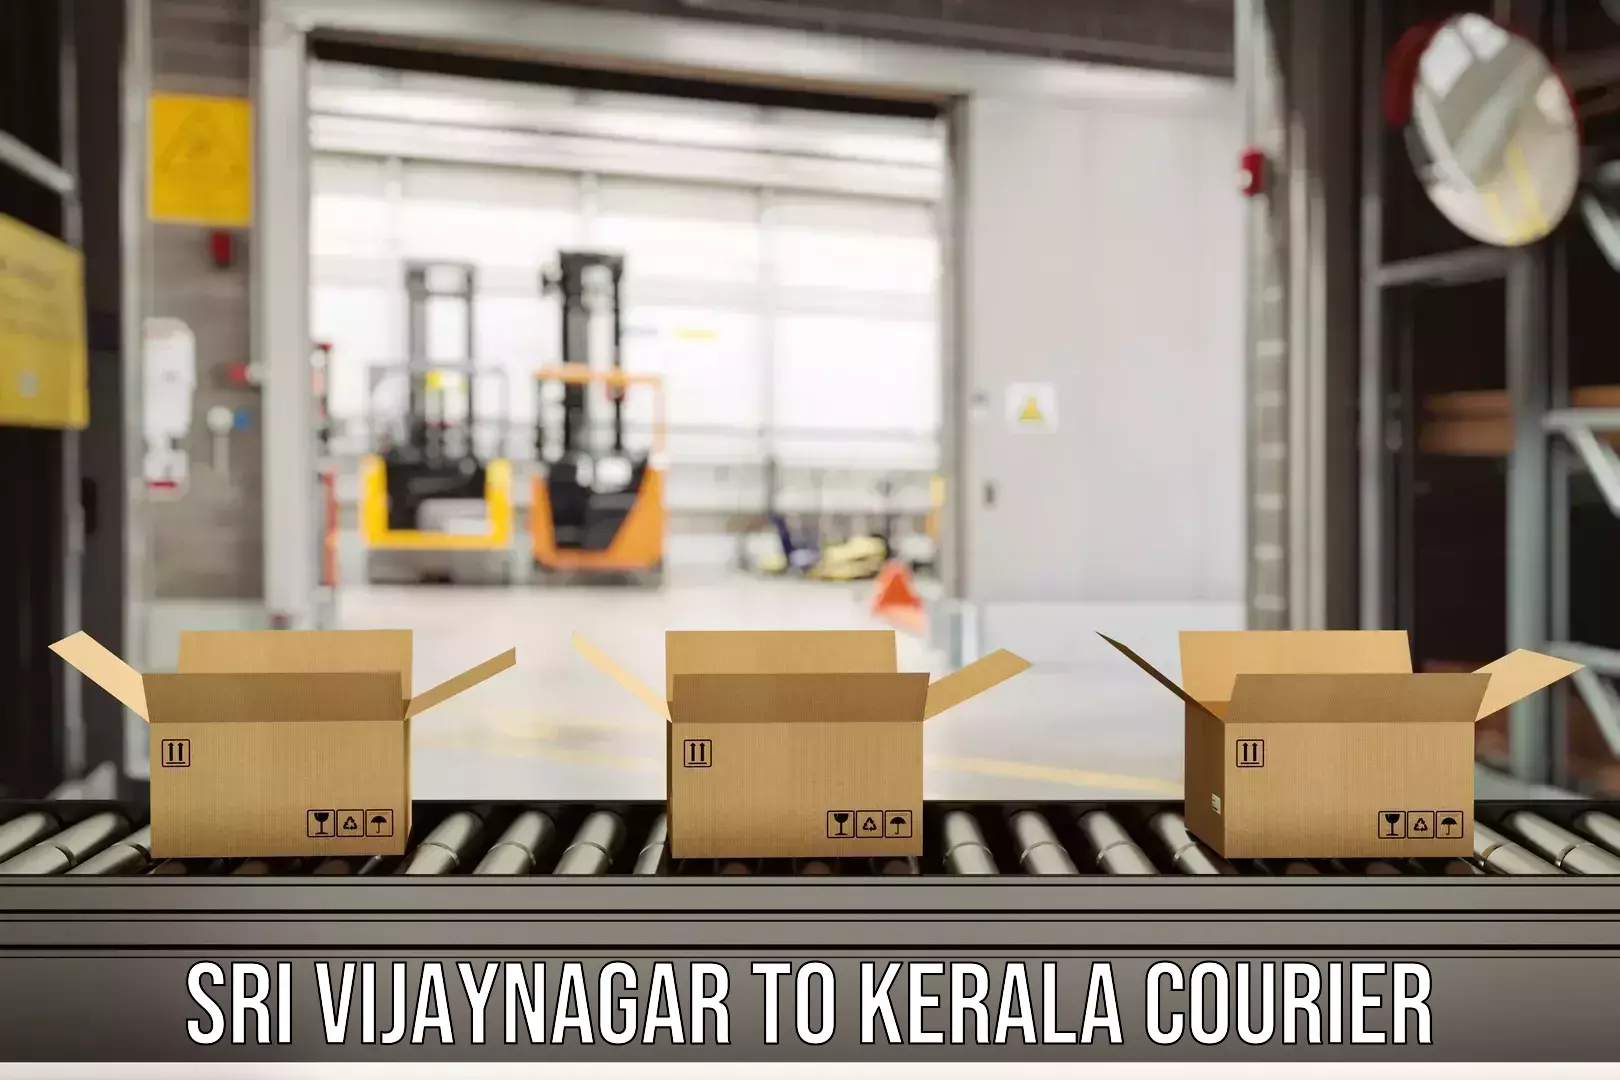 Courier rate comparison Sri Vijaynagar to North Paravur